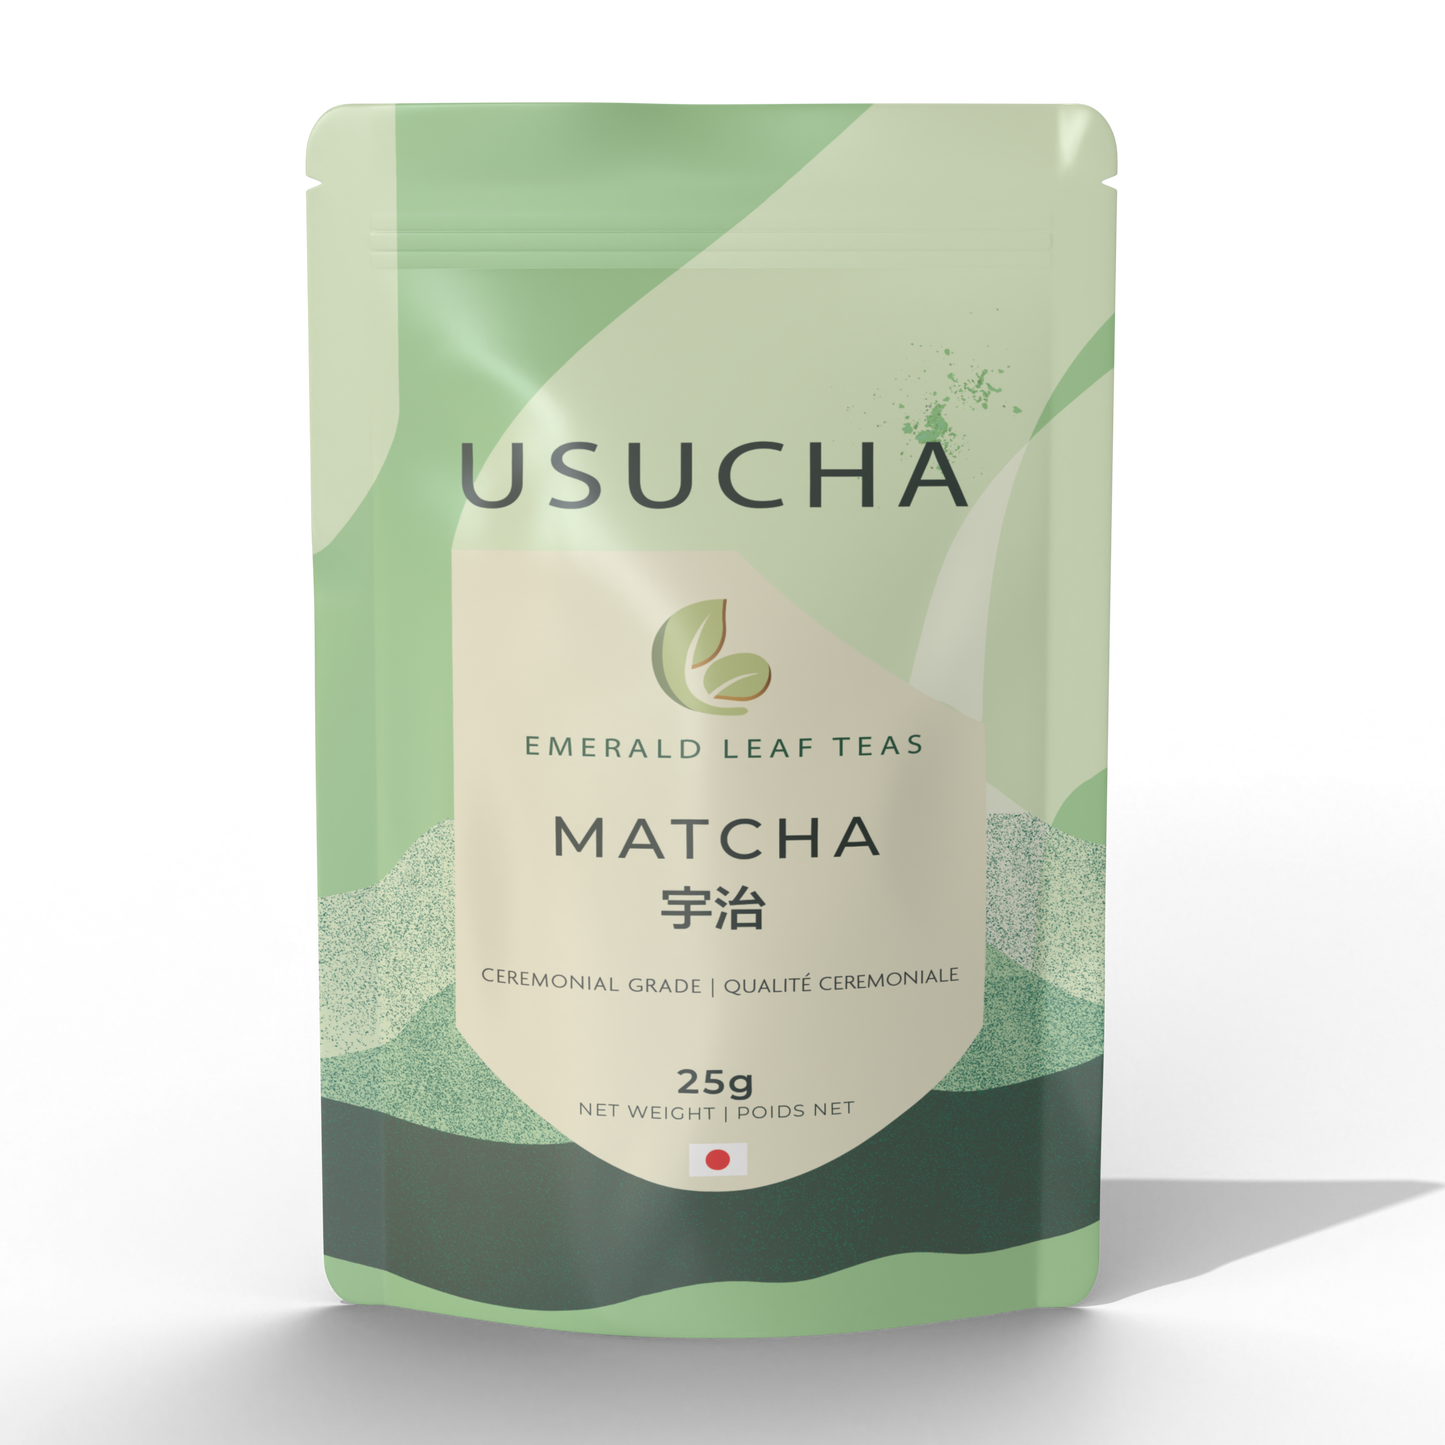 USUCHA - Ceremonial Grade Matcha